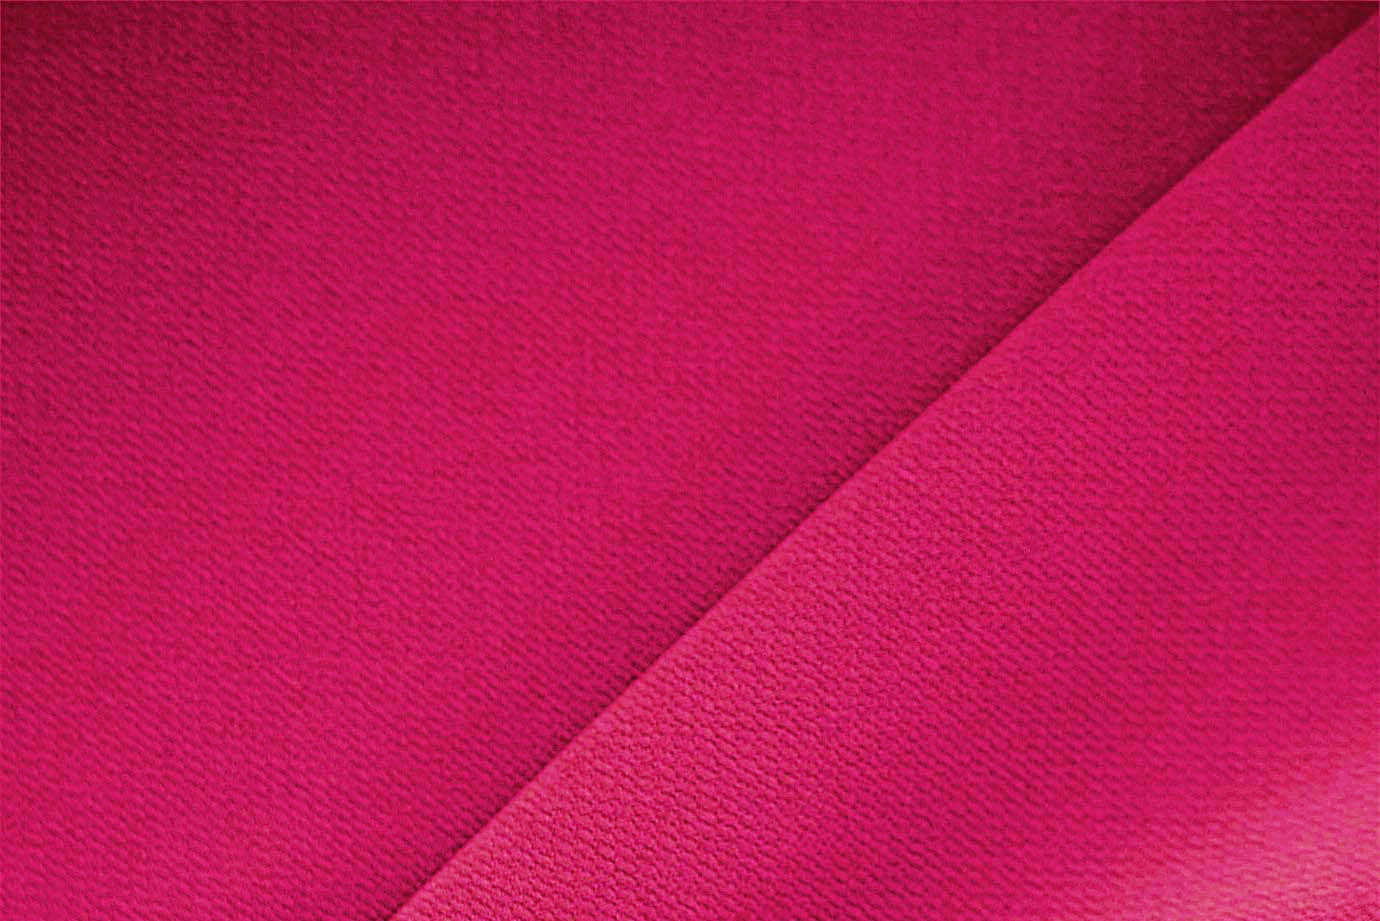 Bougainvillea fuchsia pure silk duchesse satin fabric for dressmaking